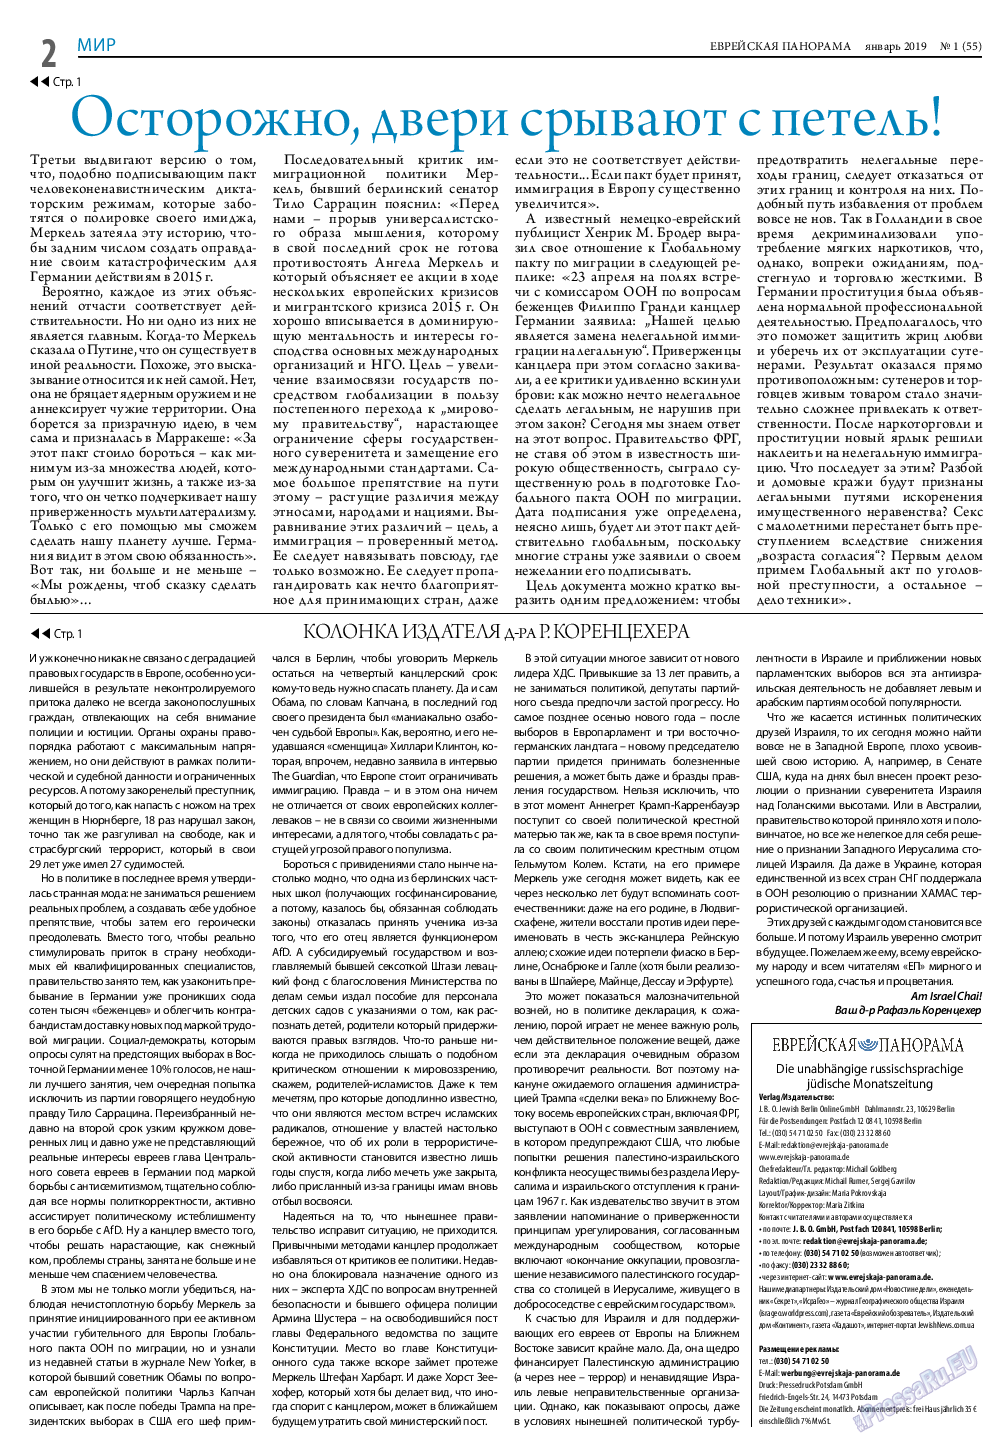 Еврейская панорама, газета. 2019 №1 стр.2